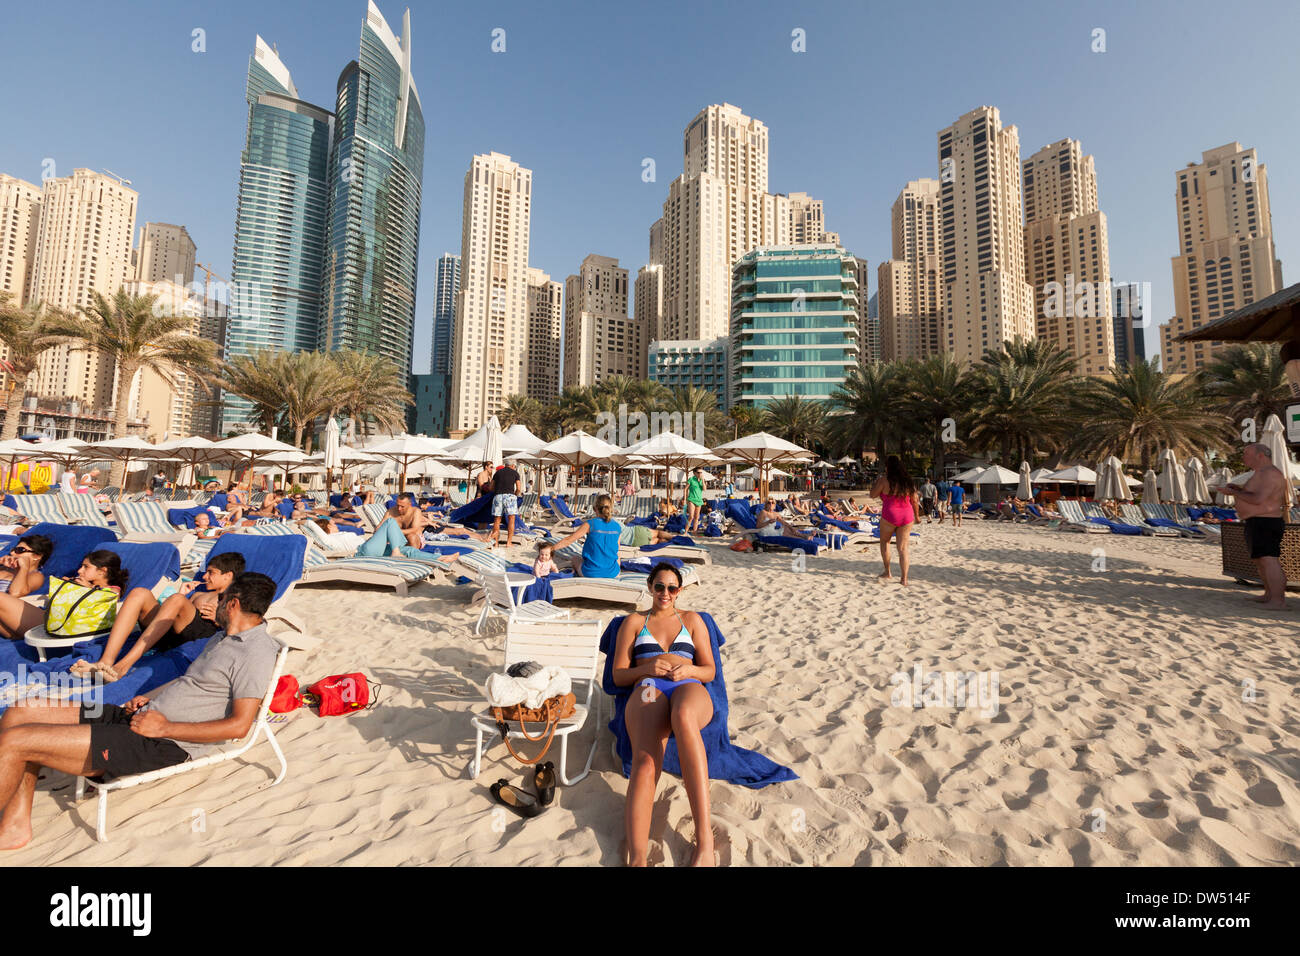 Dubai Beach; 5 star Hilton Hotel and beach with guests on holiday, Jumeirah Beach Resort, Dubai, United Arab Emirates, UAE, Middle east Stock Photo